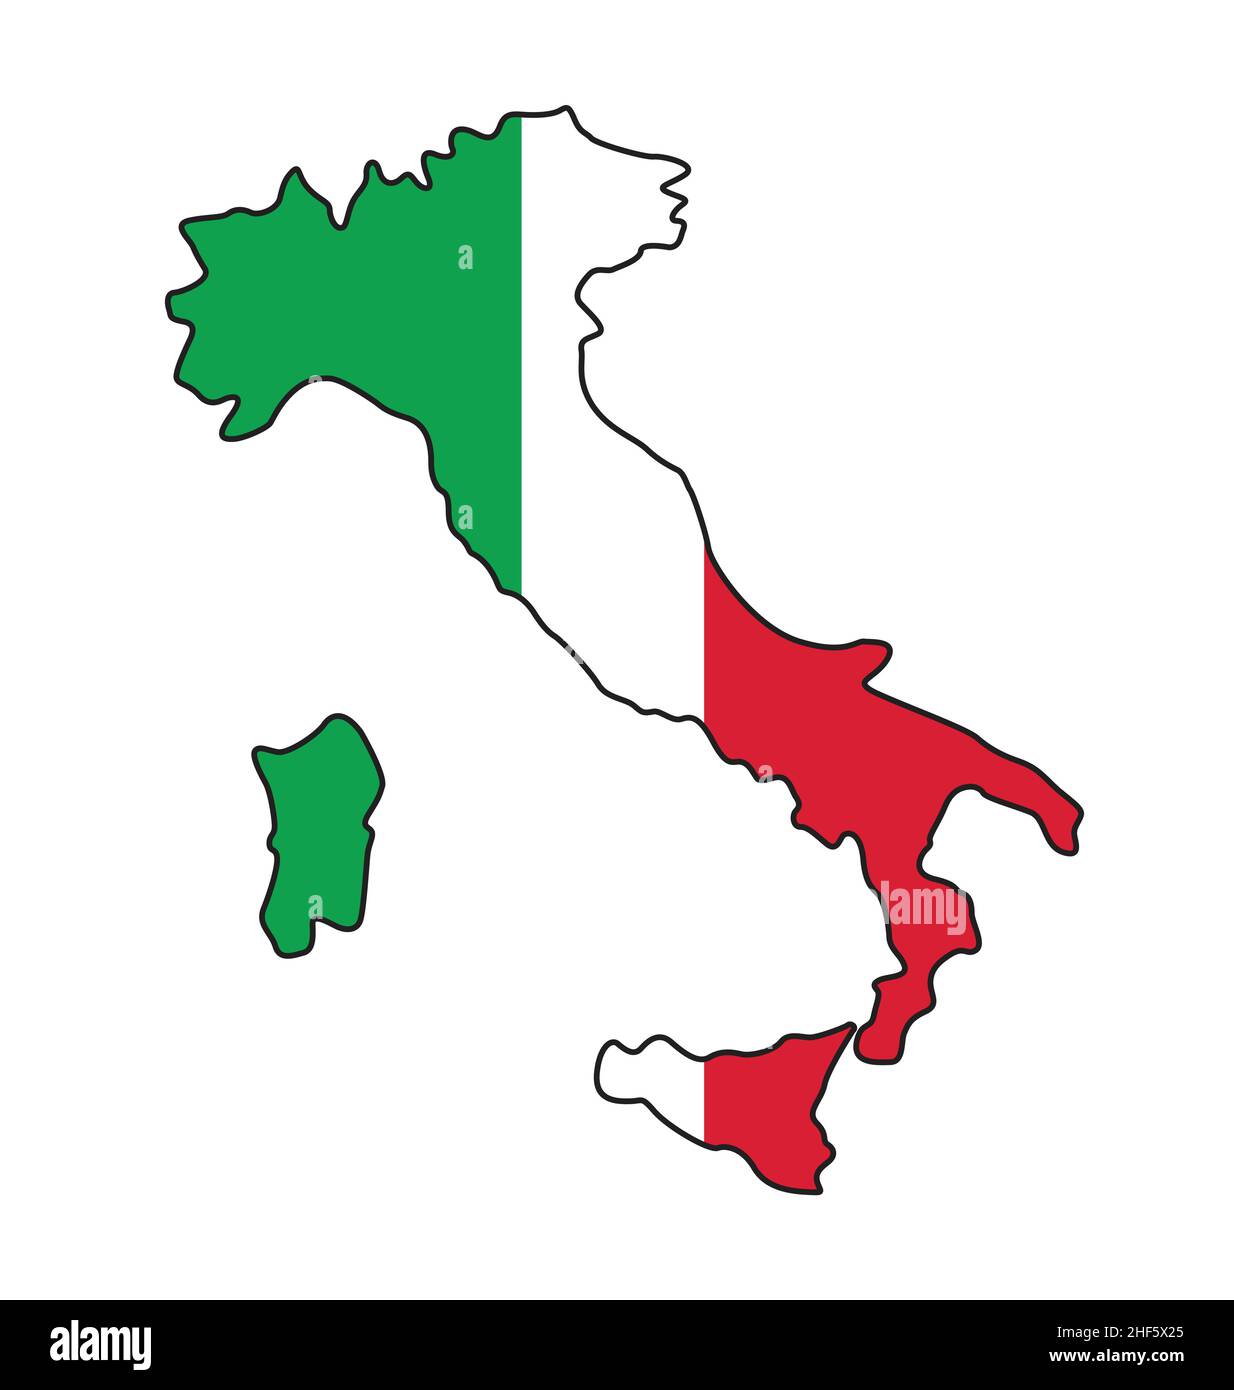 Italian flag map italy on Ausgeschnittene Stockfotos und -bilder - Alamy